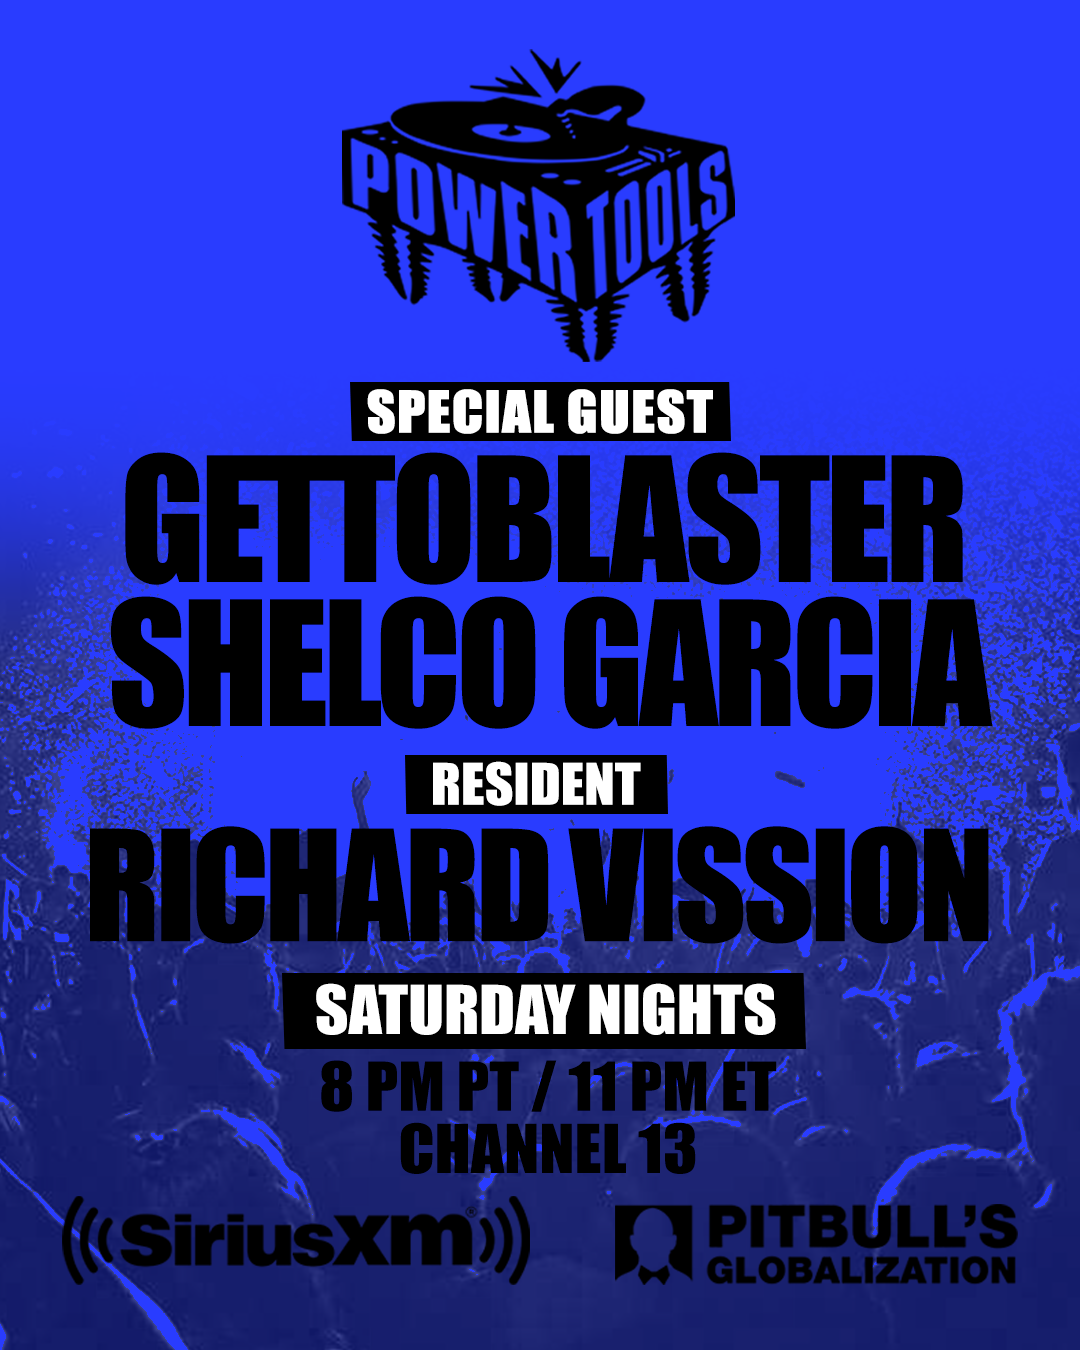 Episode 47: Powertoools ft: Gettoblaster - Shelco Garcia